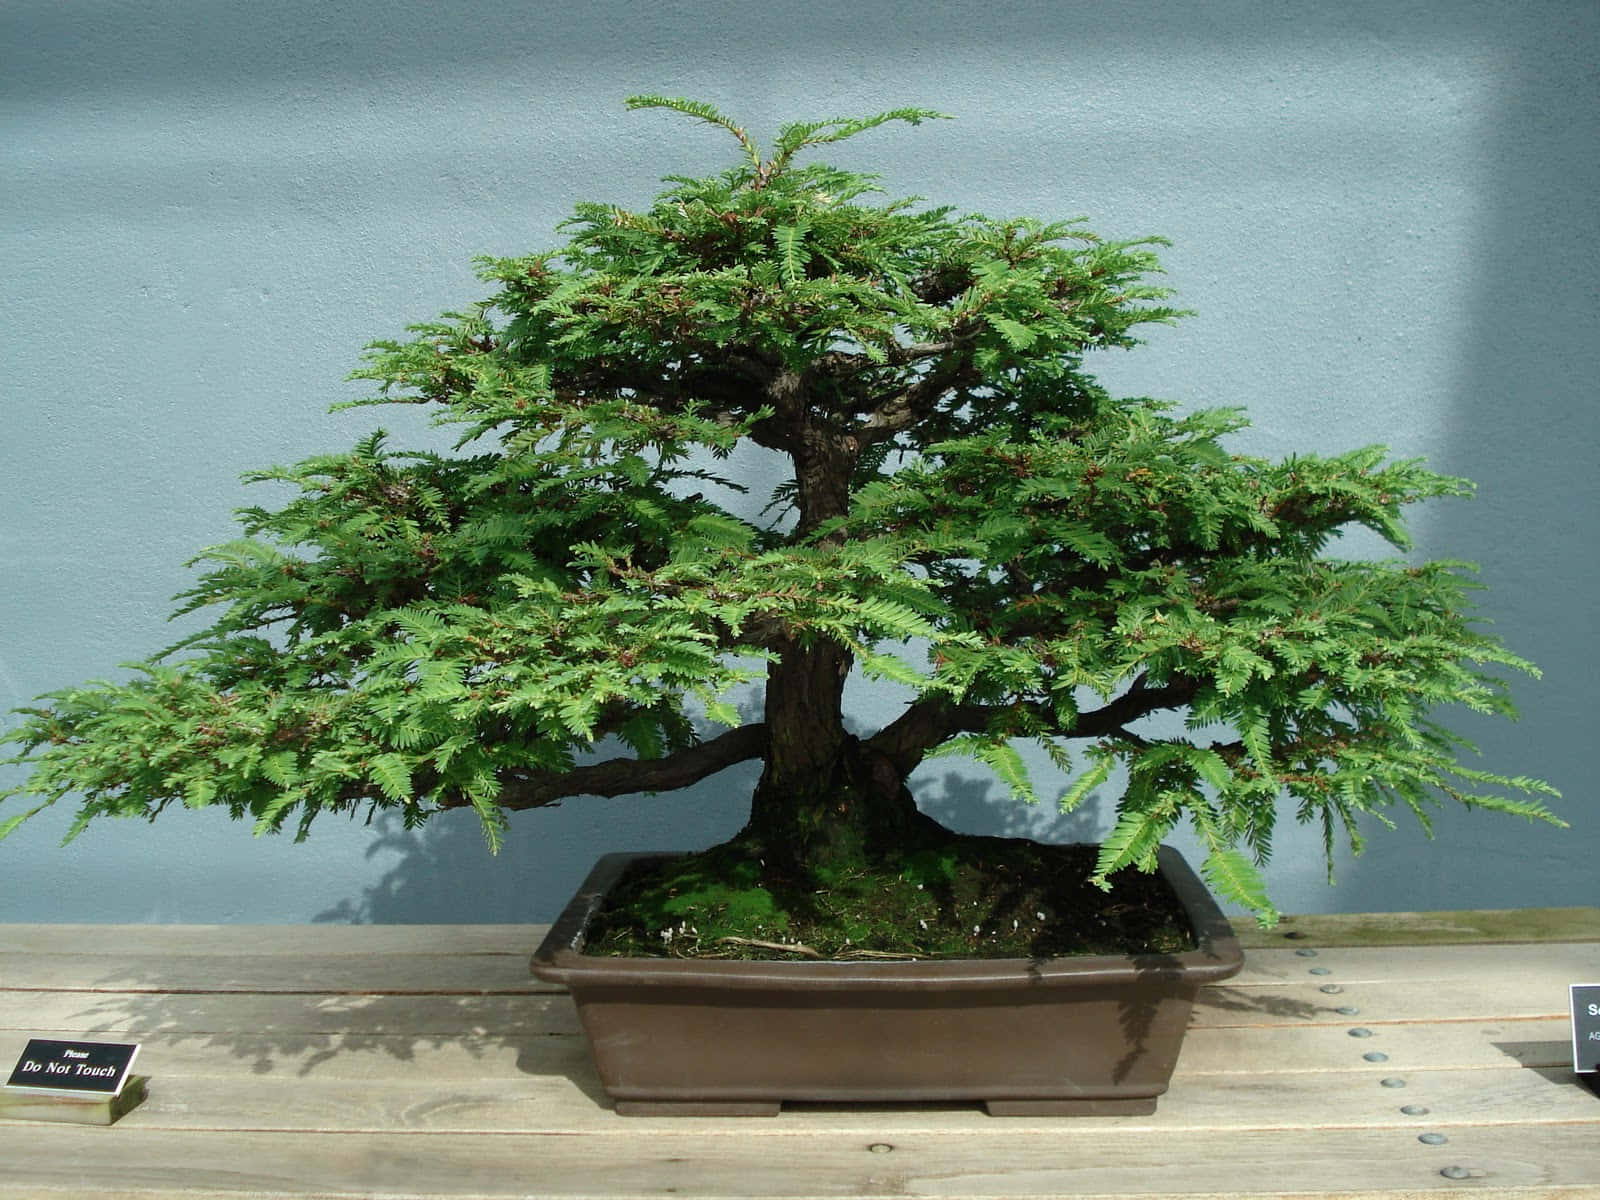 A Small Bonsai Tree On Display